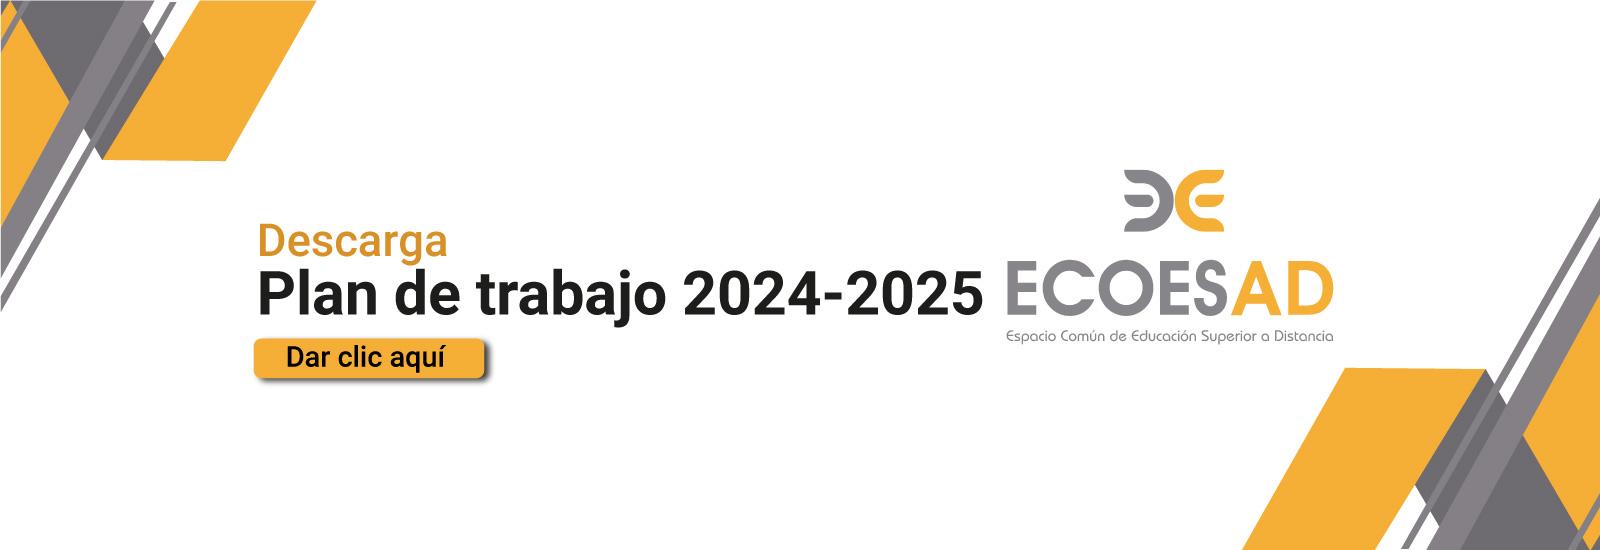 Plan de Trabajo ECOESAD 2024-2025